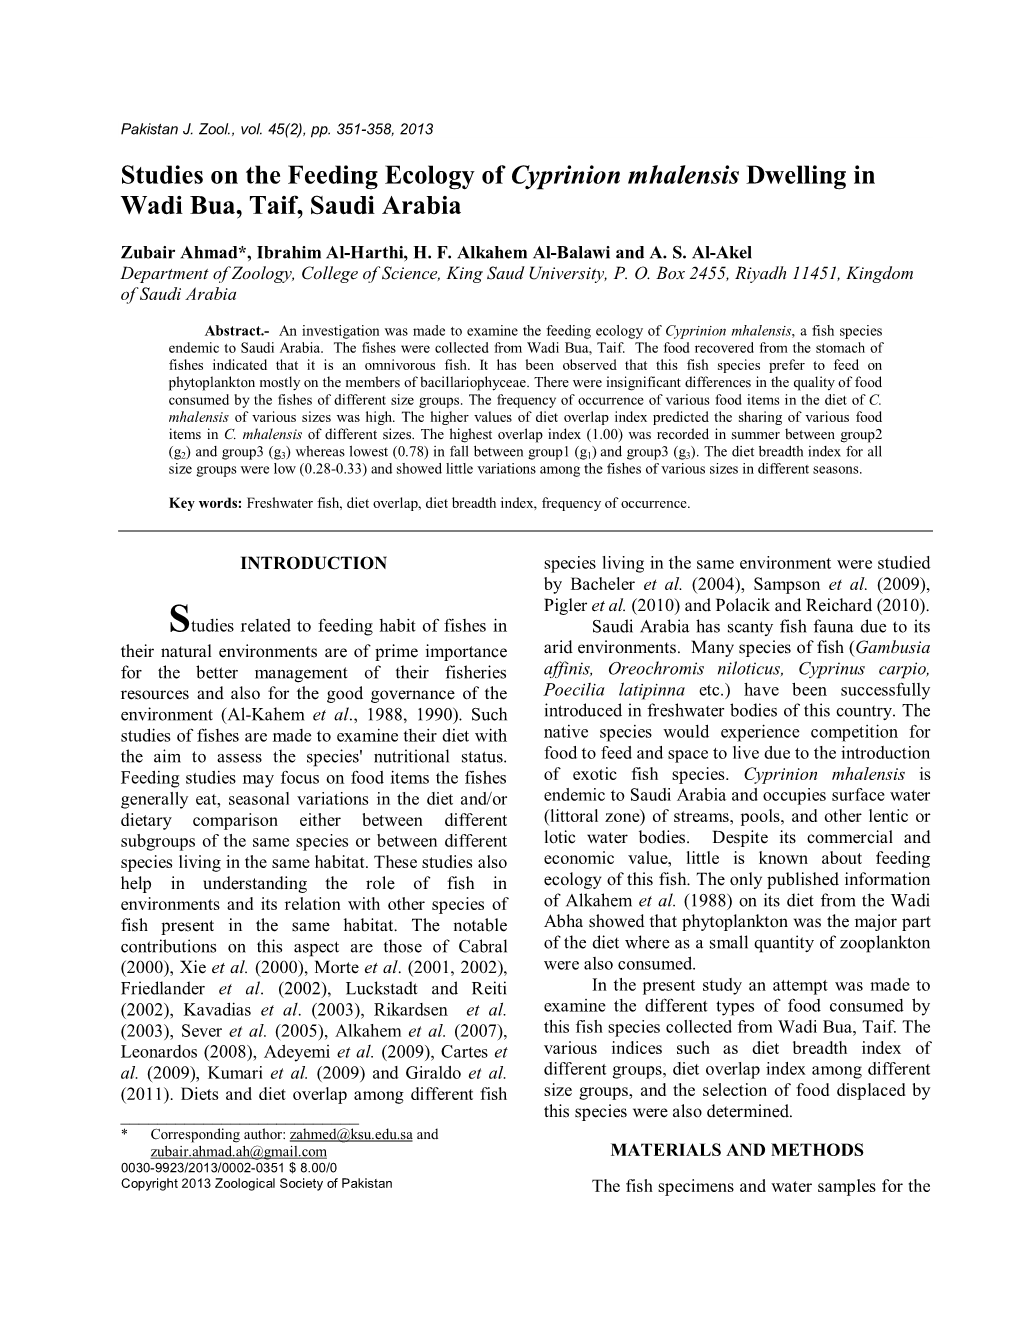 Studies on the Feeding Ecology of Cyprinion Mhalensis Dwelling in Wadi Bua, Taif, Saudi Arabia